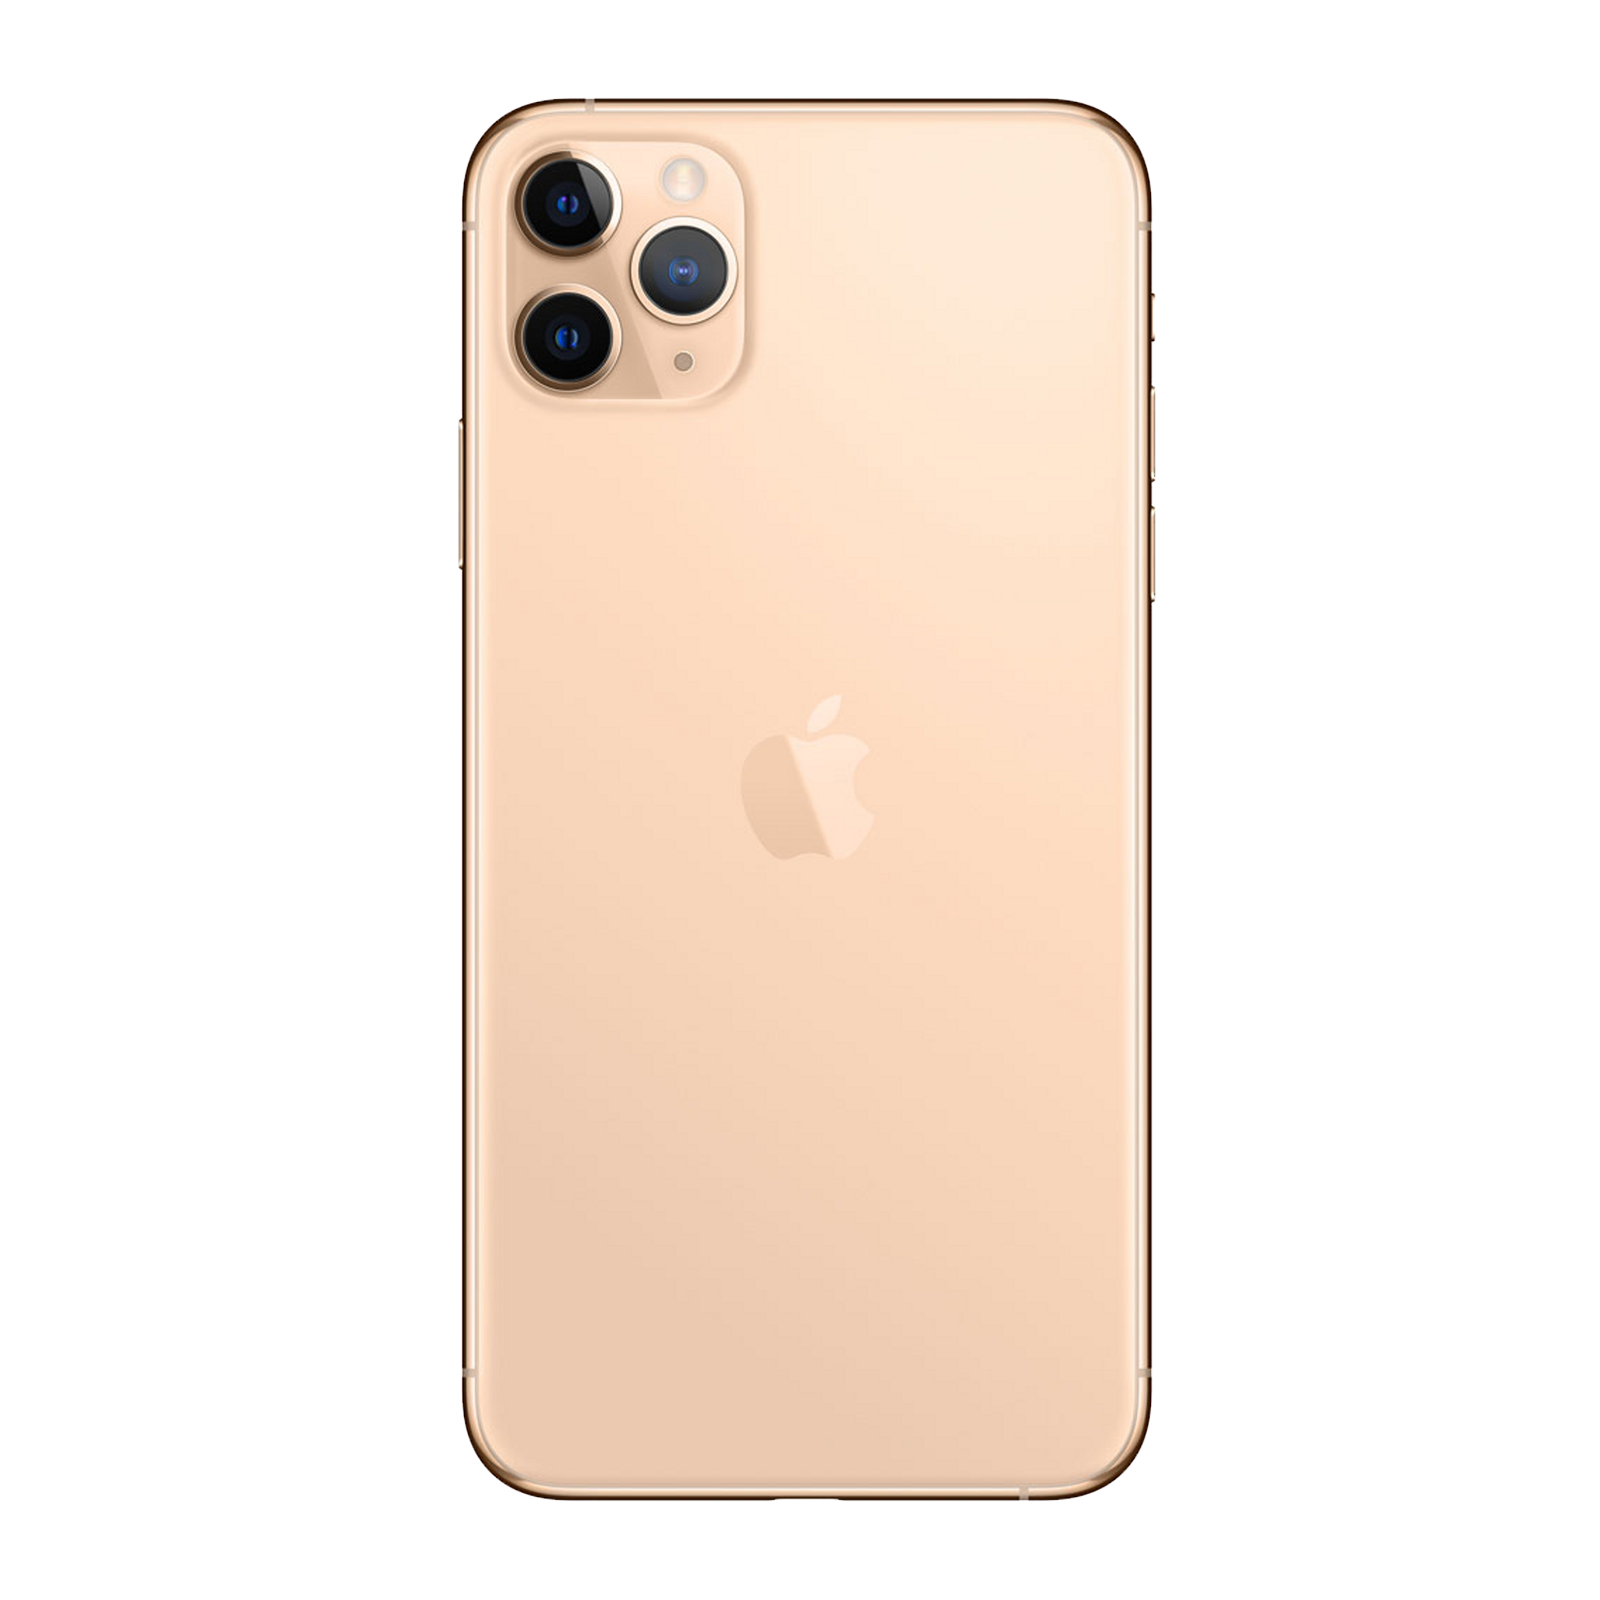 iPhone 11 Pro 256GB Gold Good Unlocked - New Battery